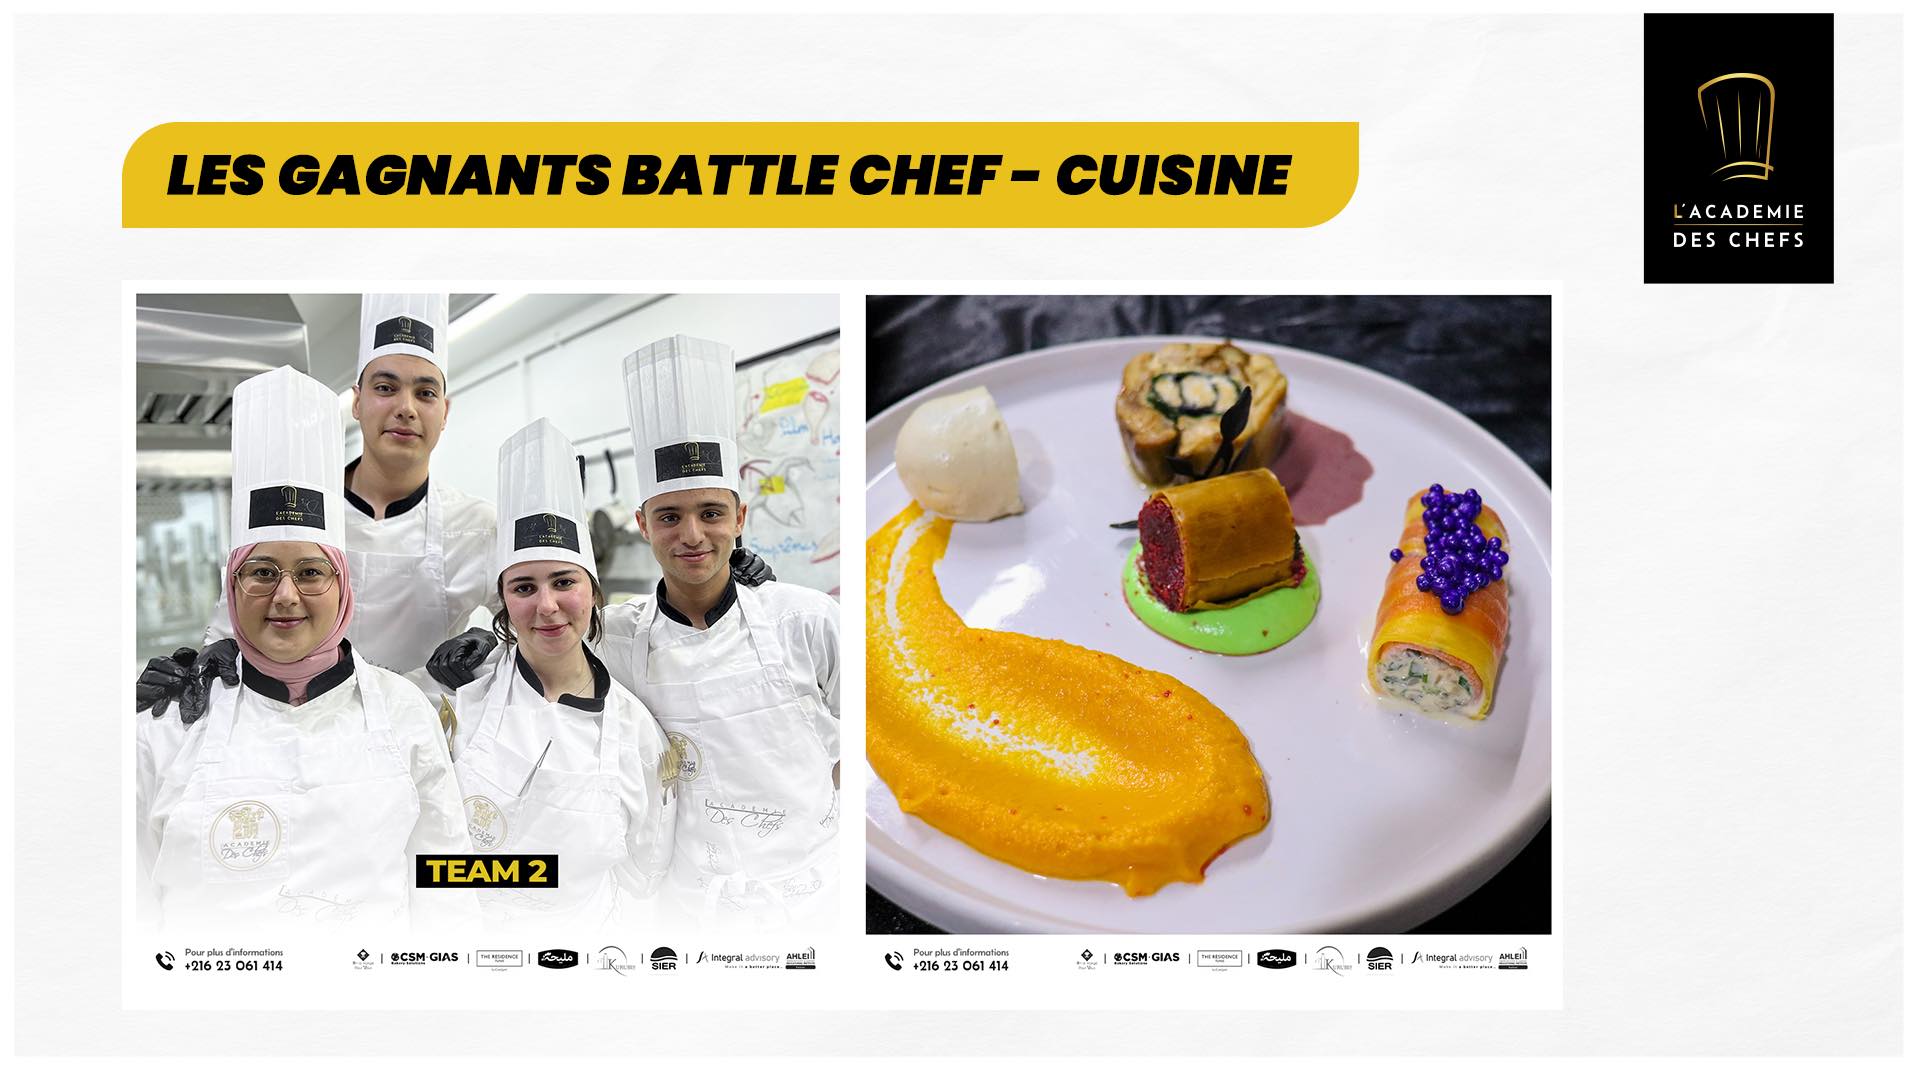 Battle chef – cuisine